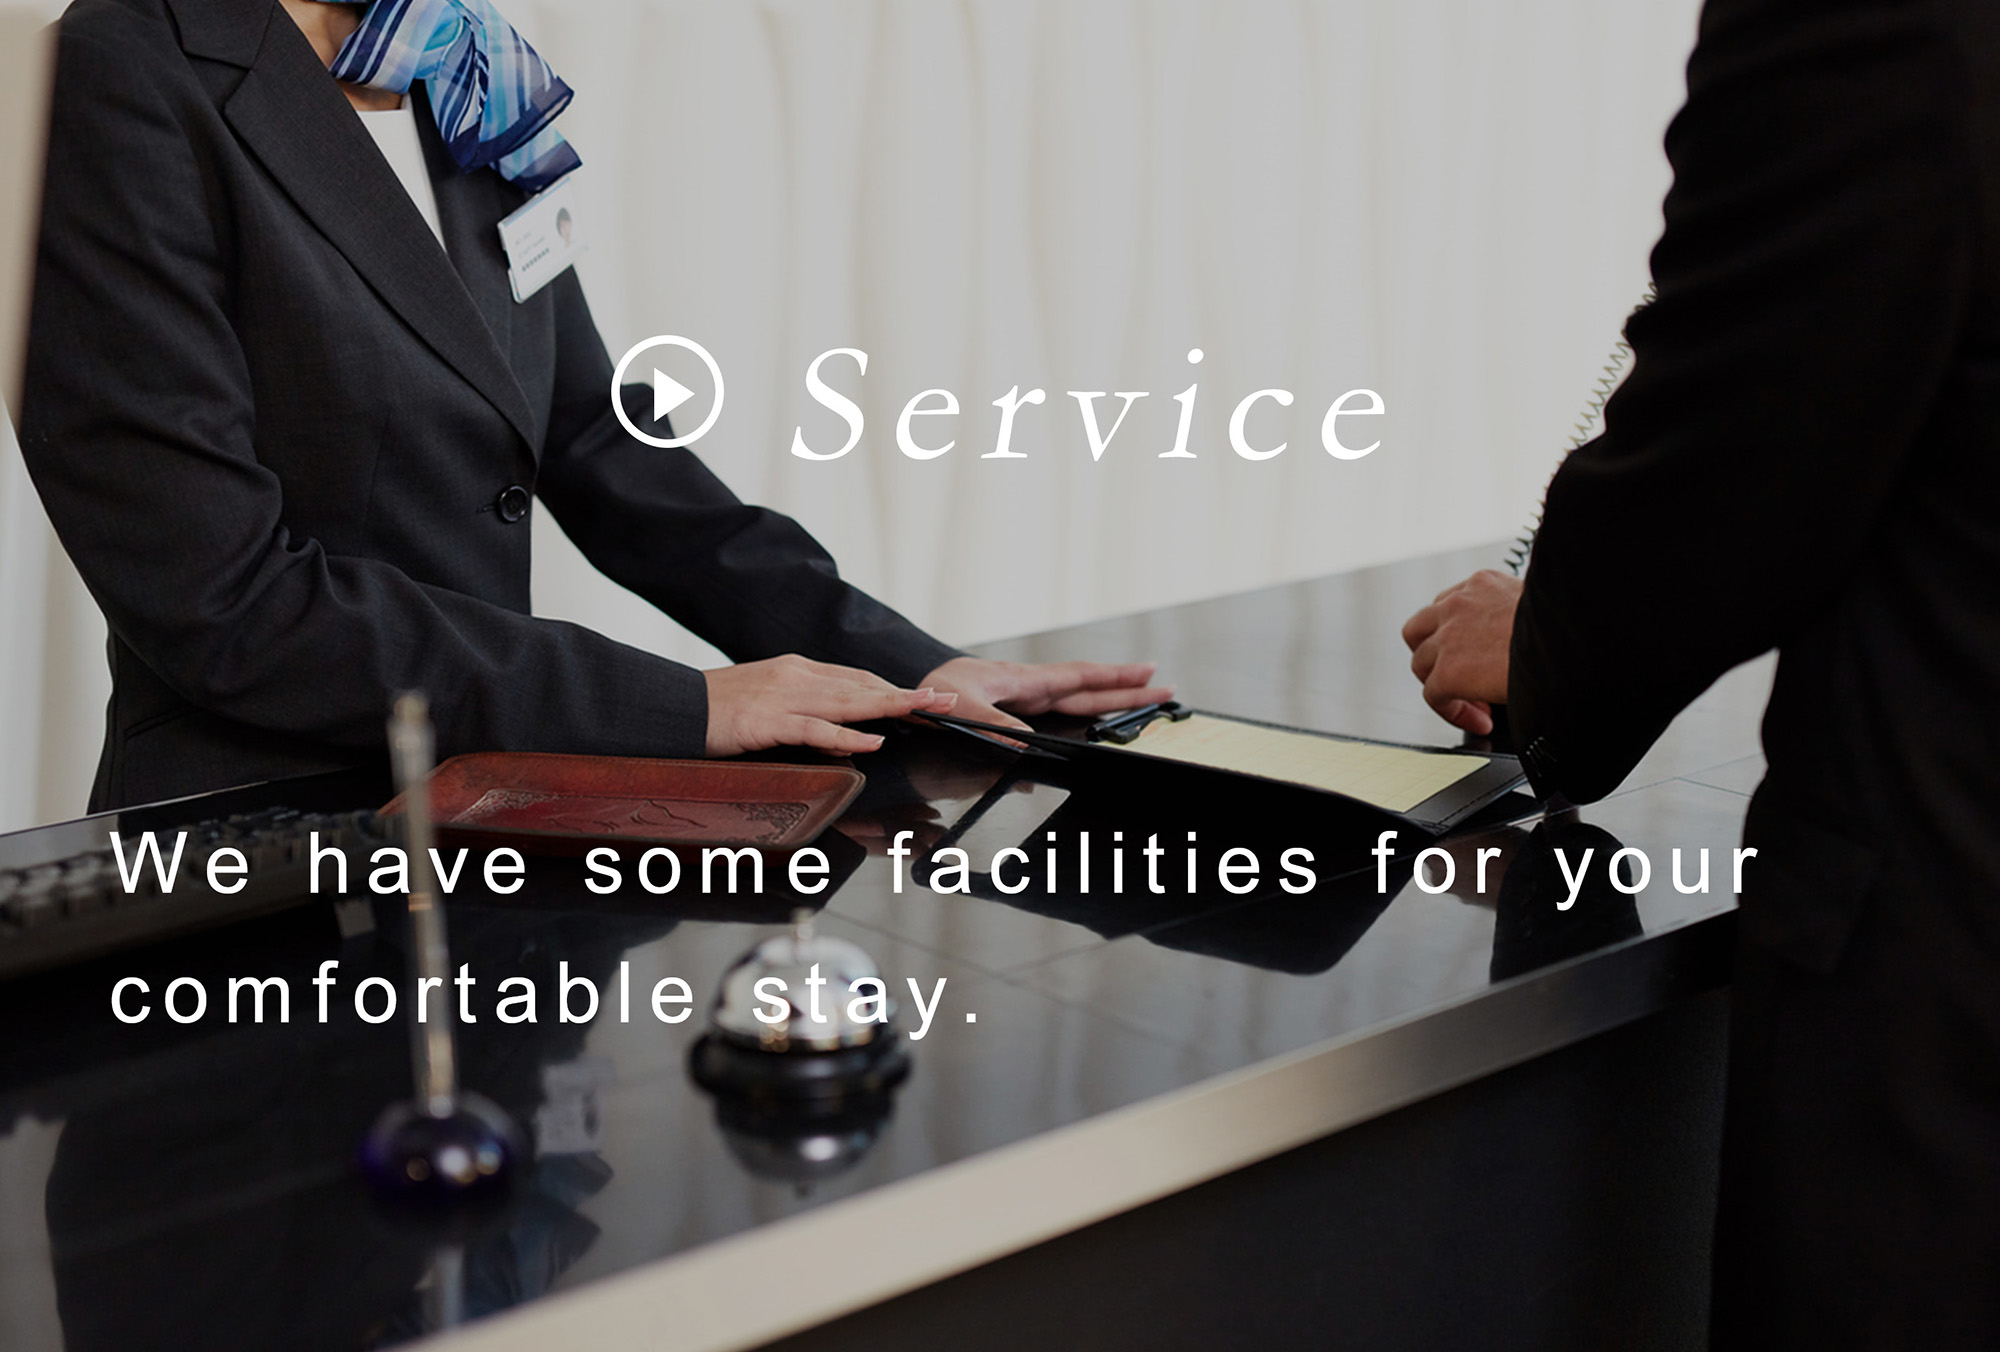 Service ご滞在中に充実した時間を過ごしていただくため、各種施設を備えております。快適なお時間をお過ごしください。